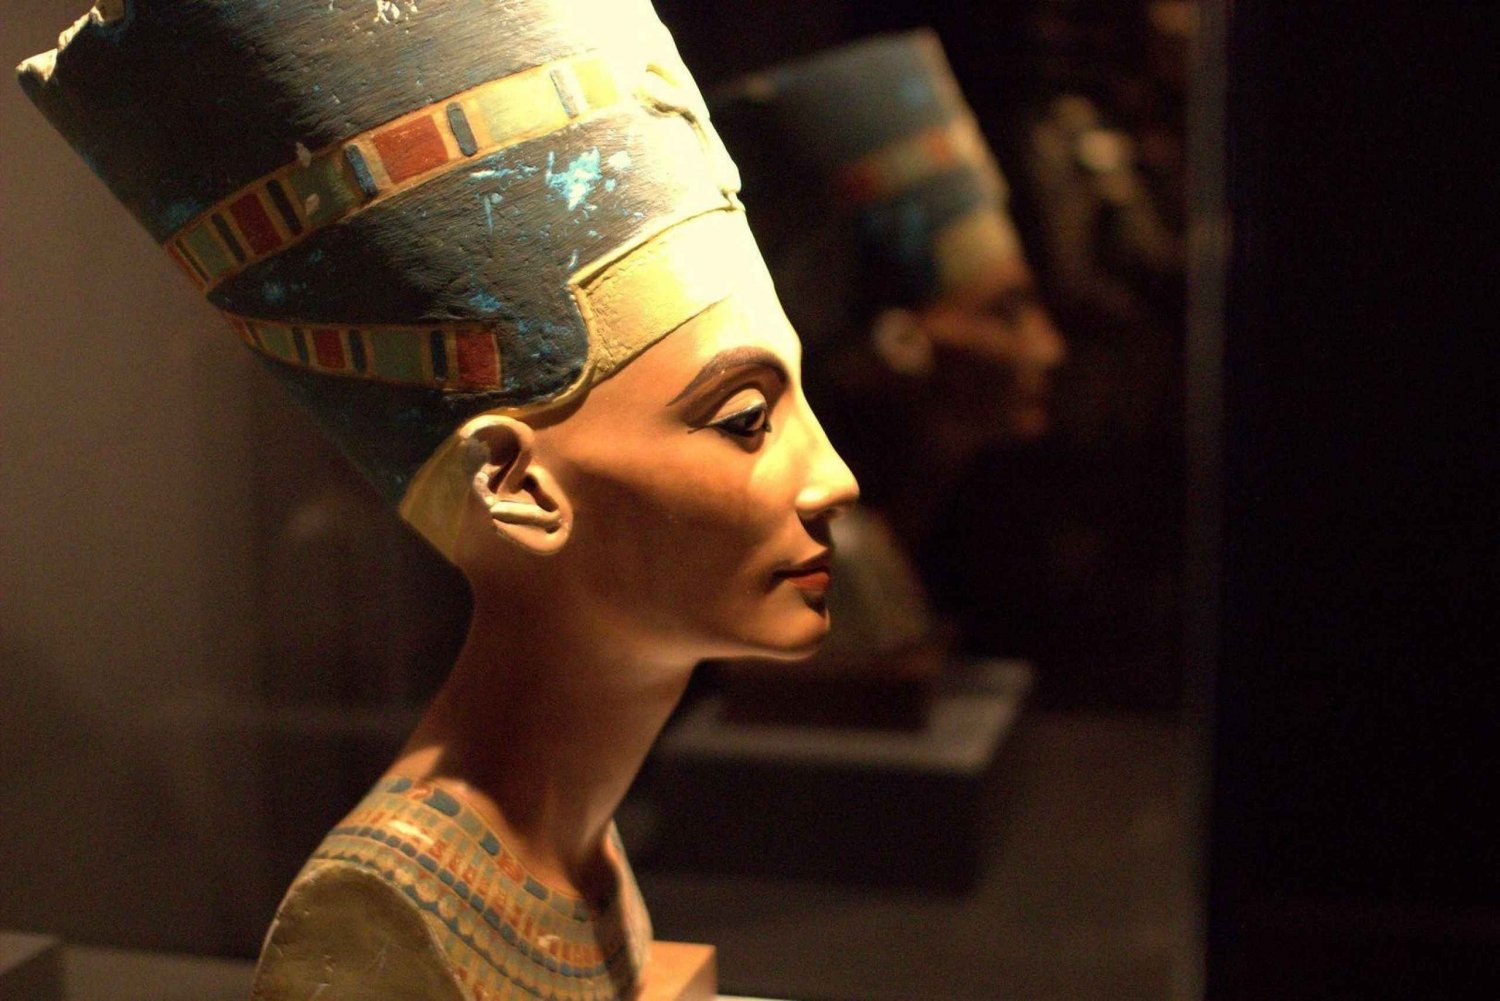 Egyptisk samling: Neues Museum Ticket (ENG)